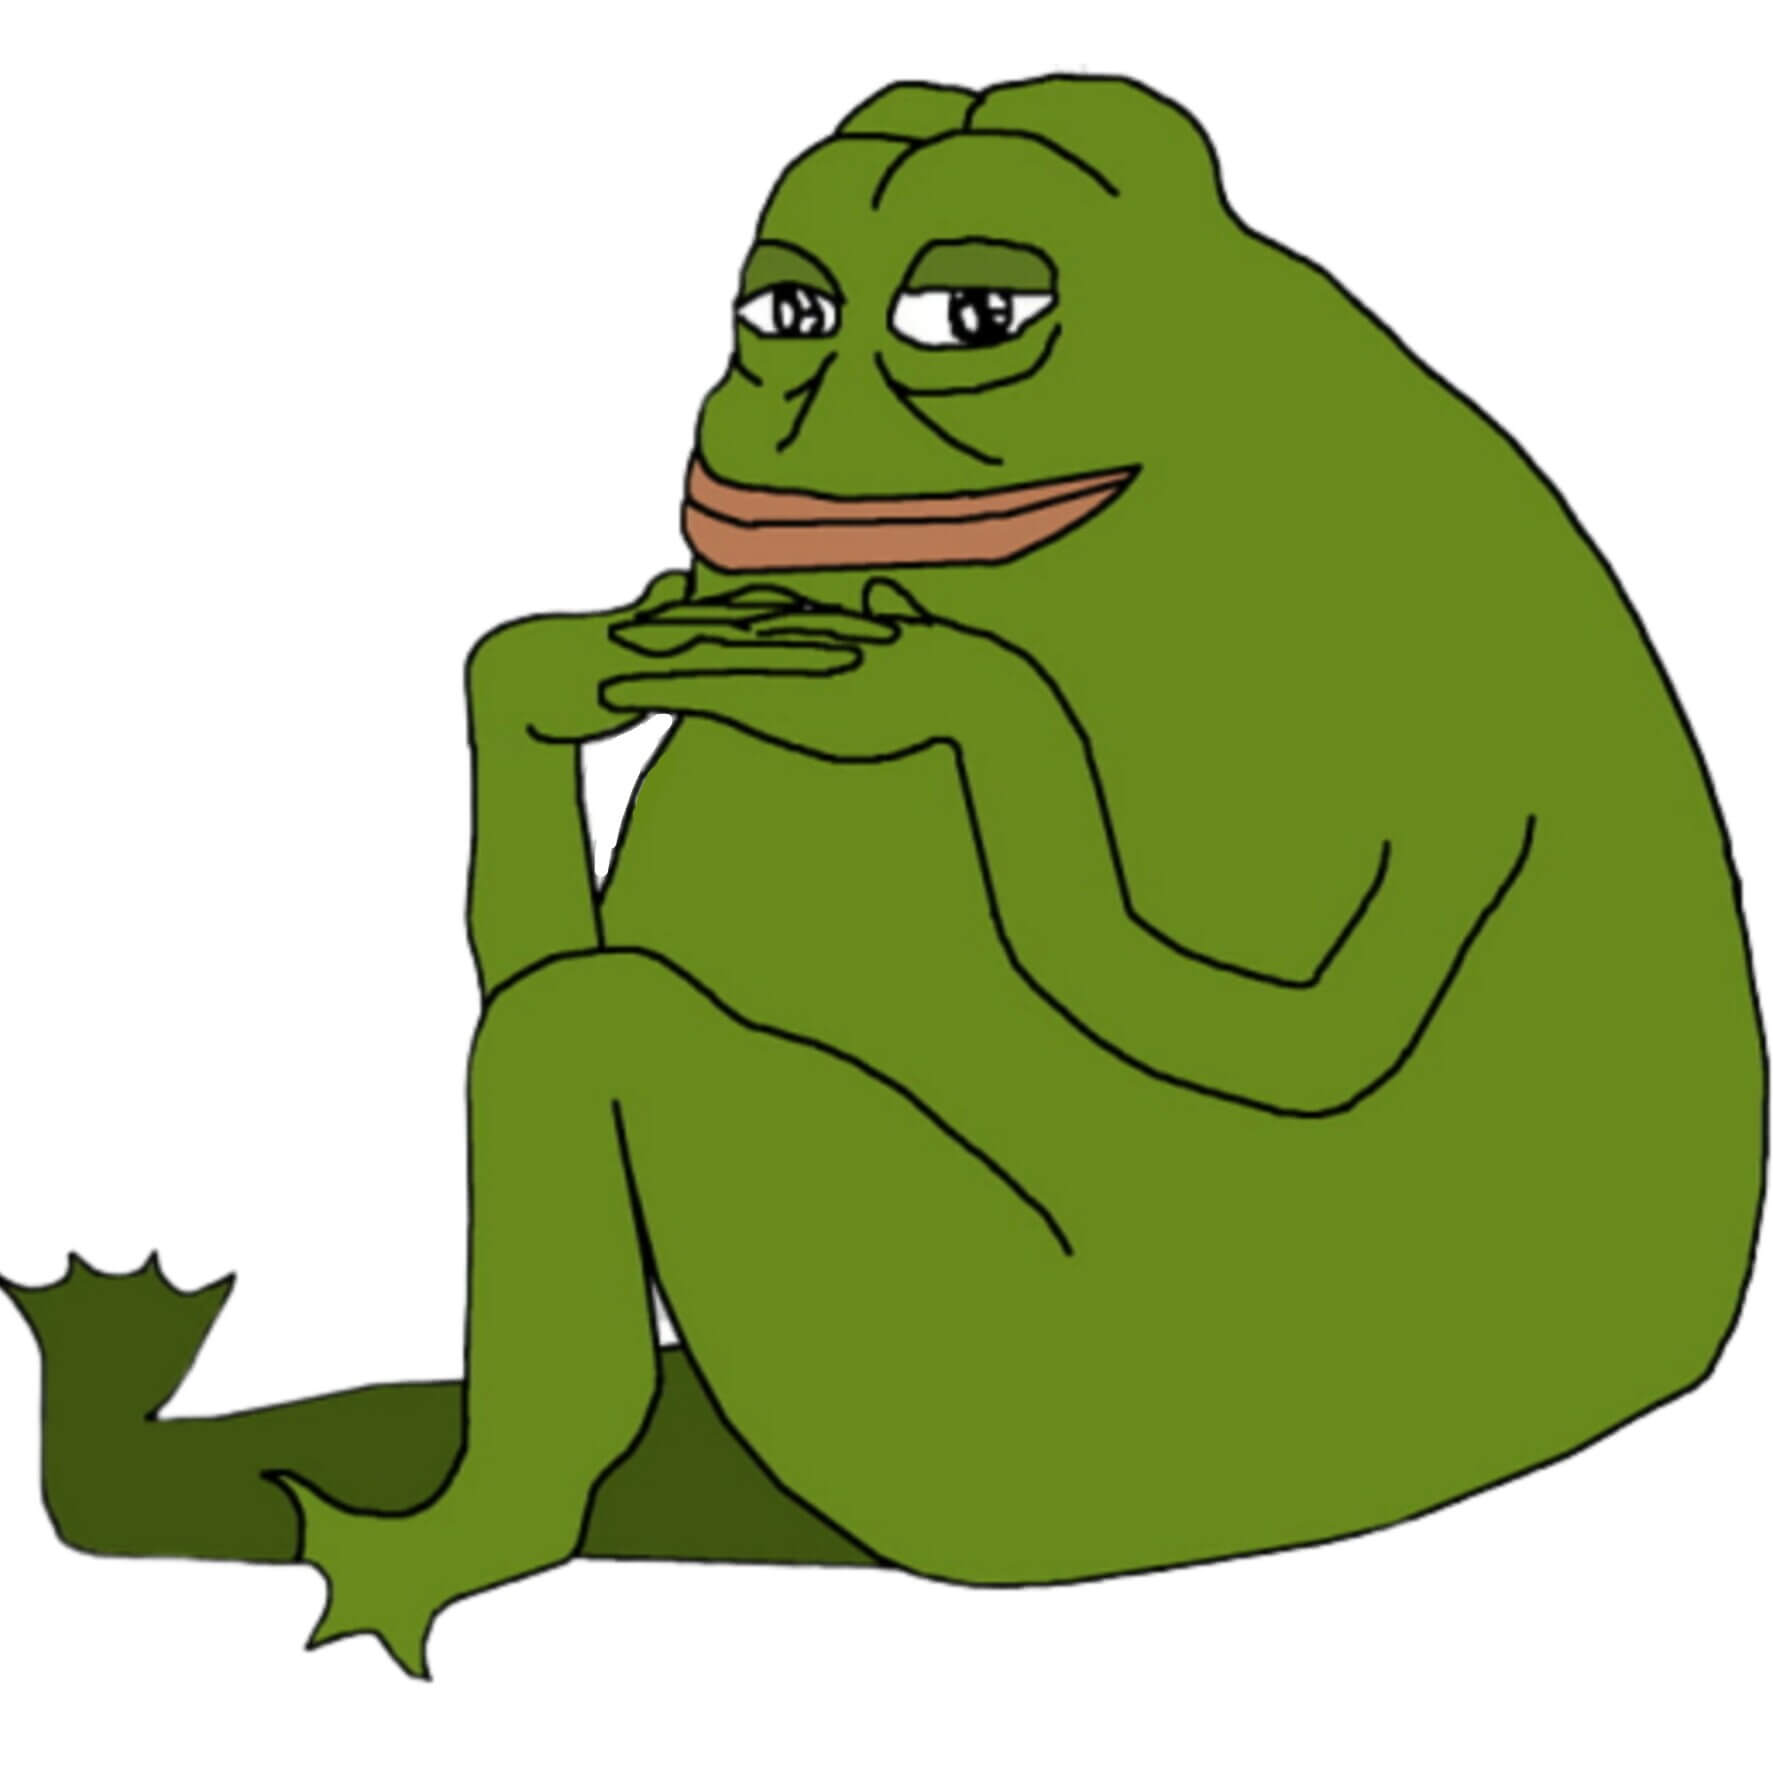 Pepe The Frog  Meme  Templates Indian Meme  Templates